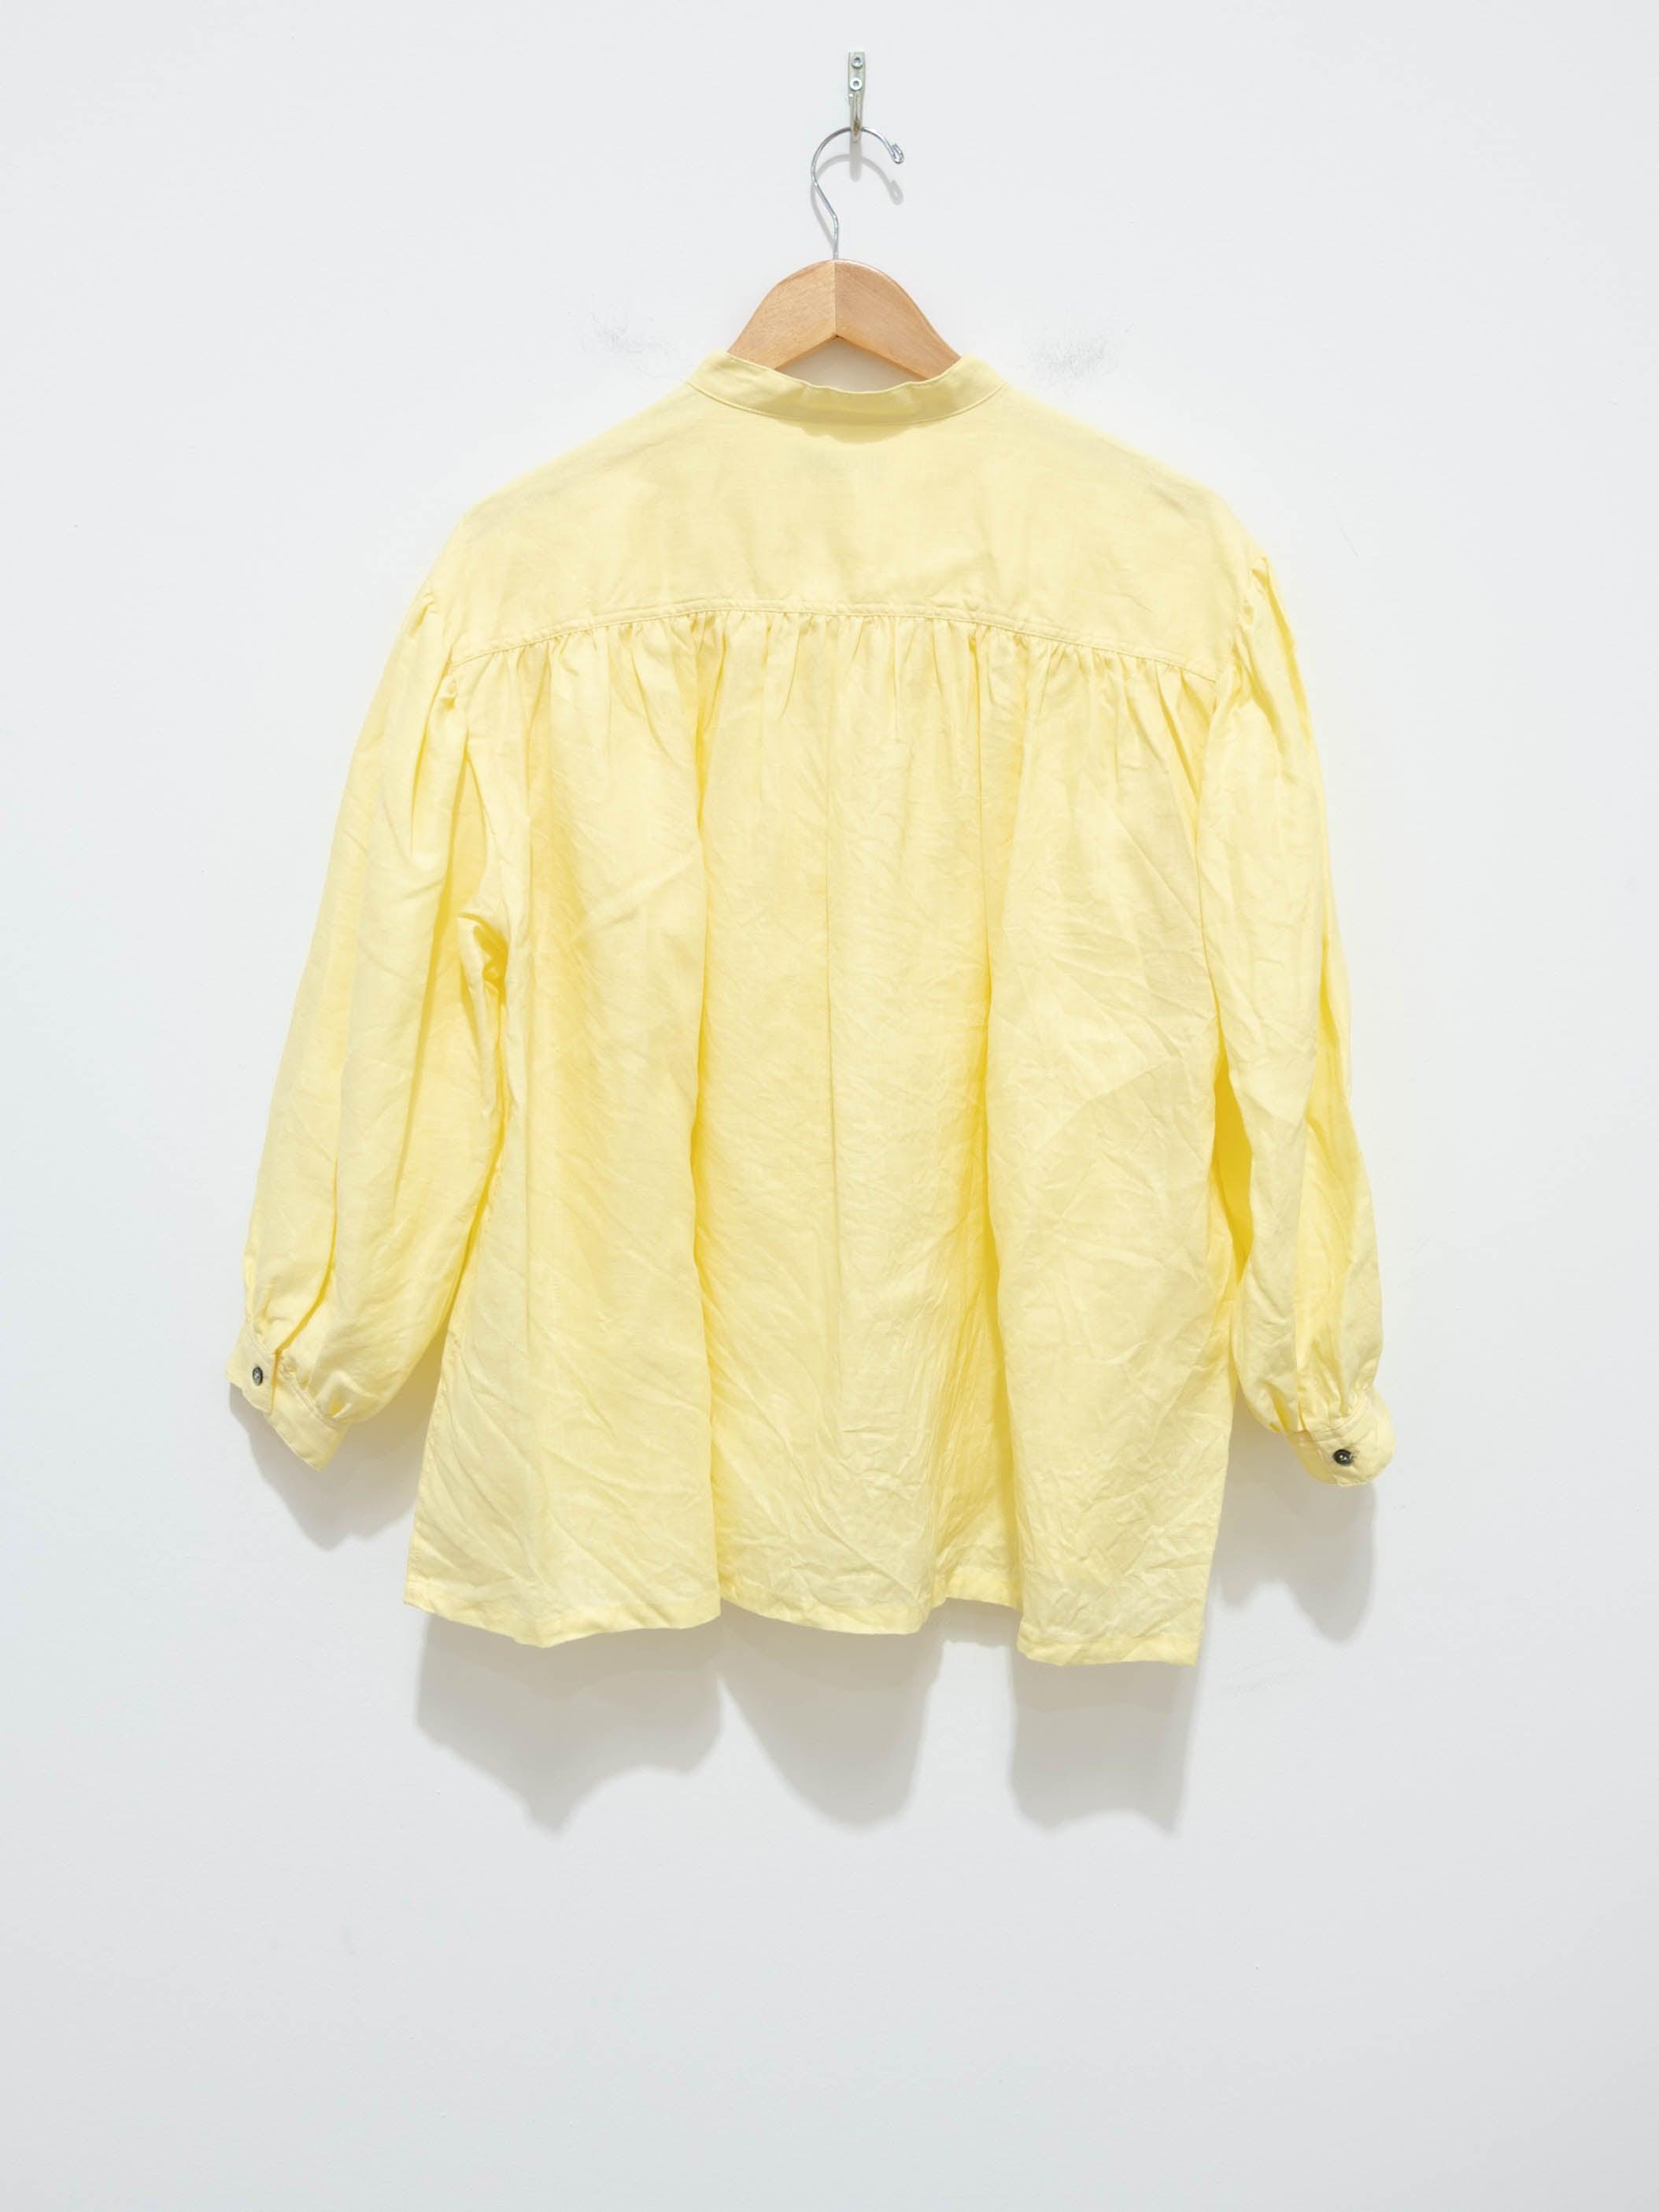 Namu Shop - Ichi Antiquites Color Linen Shirt - Lemon